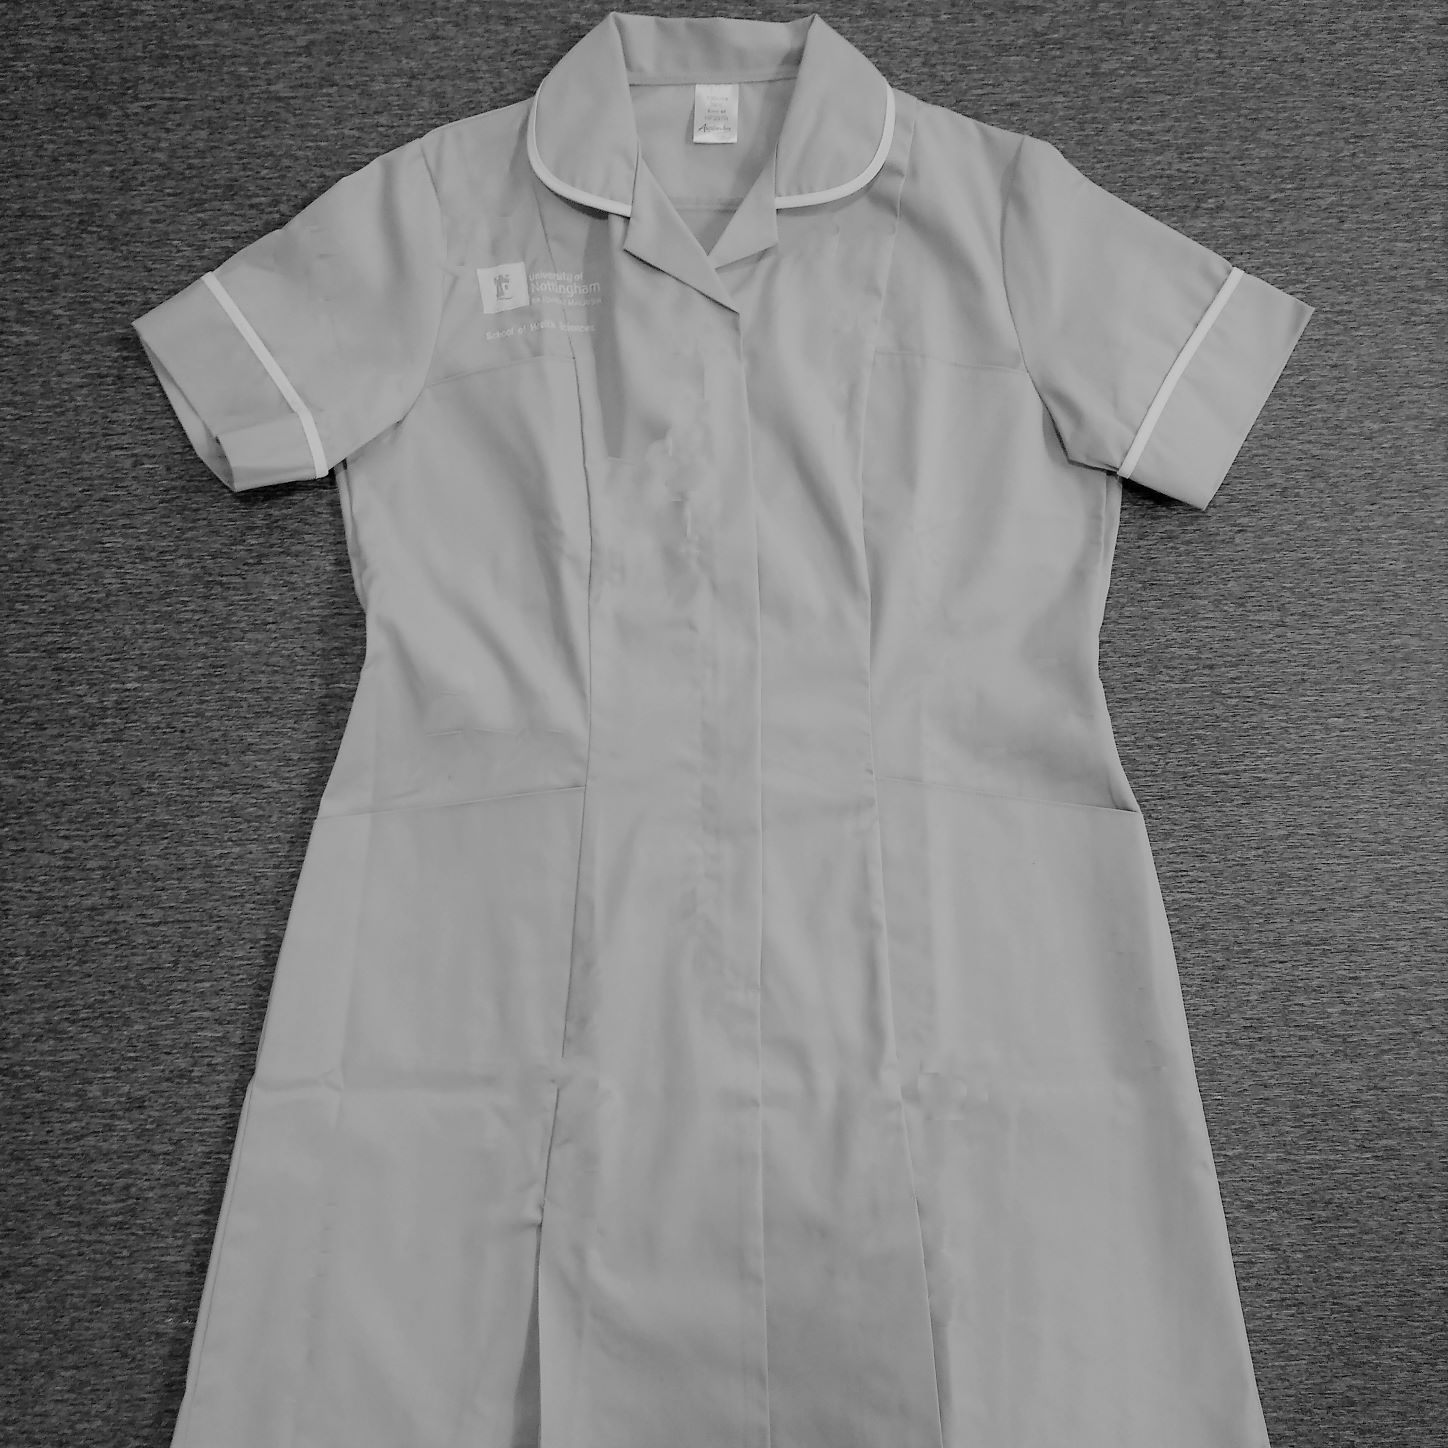 Midwifery Placement dress